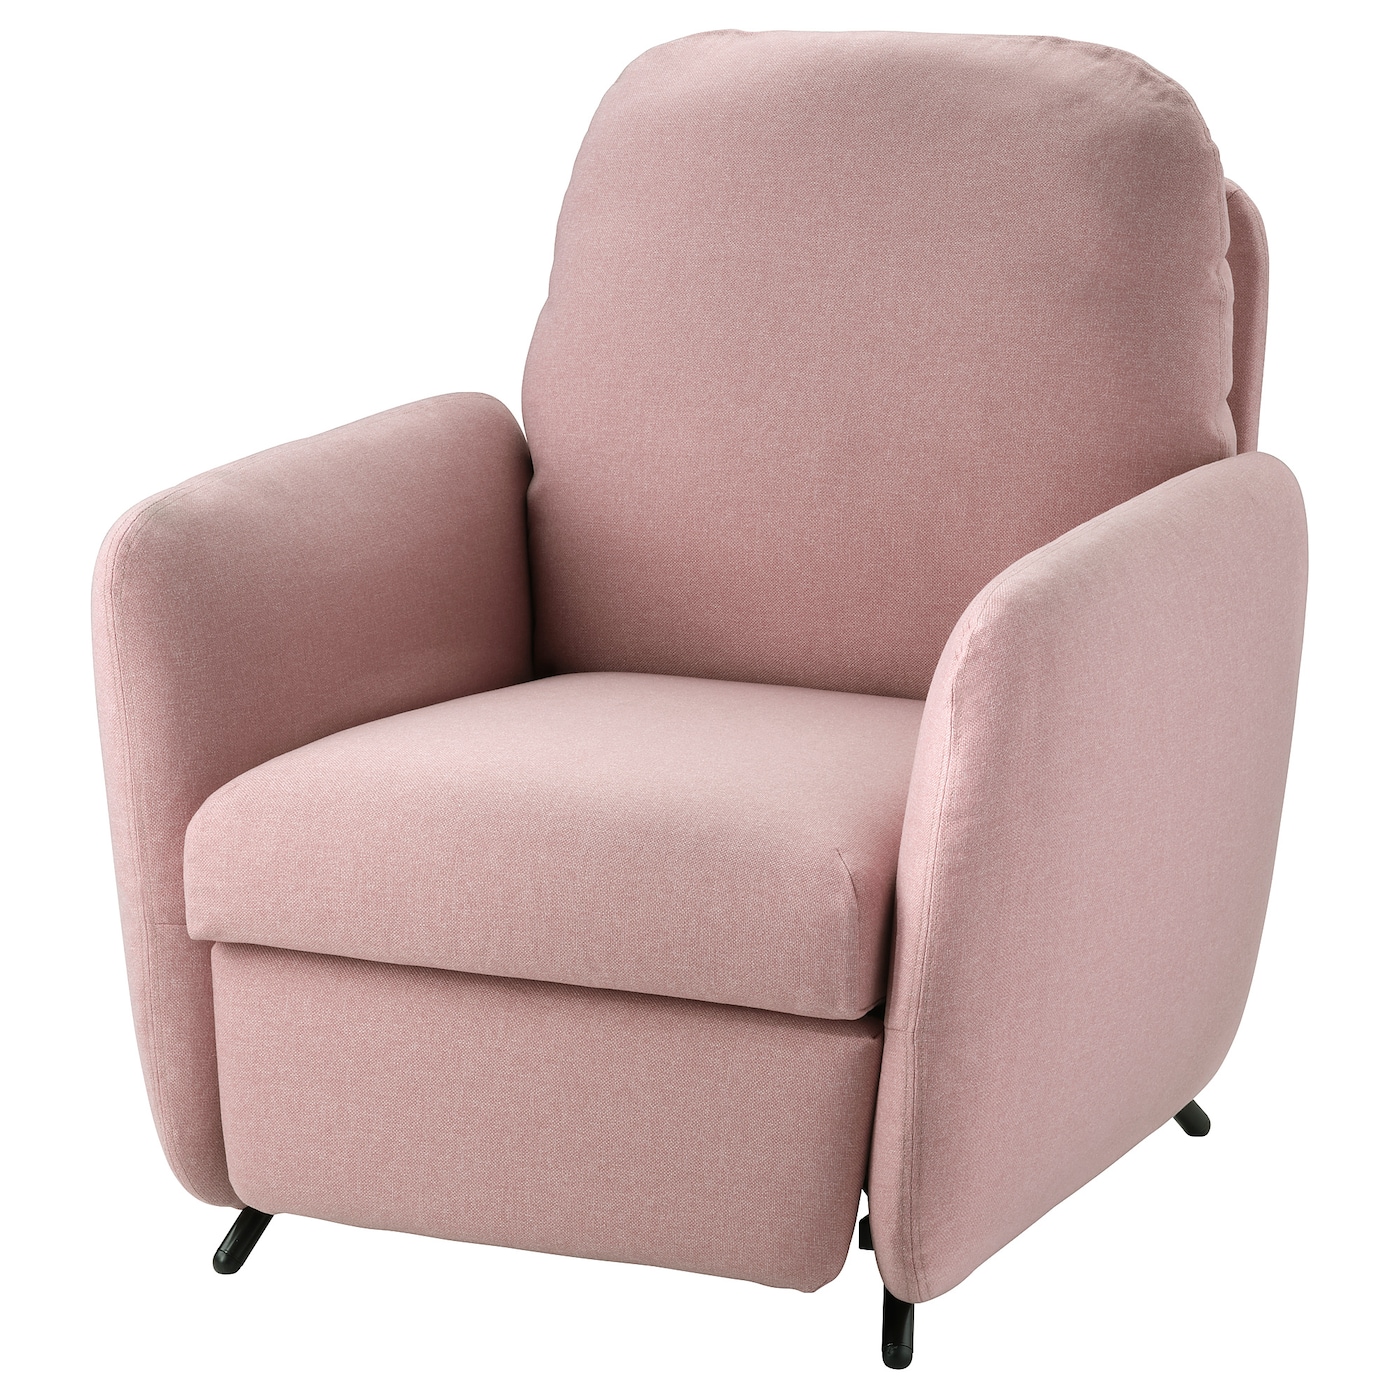 Кресло-реклайнер - IKEA EKOLSUND, 89х97х103 см, розовый, ЭКОЛСУНД ИКЕА